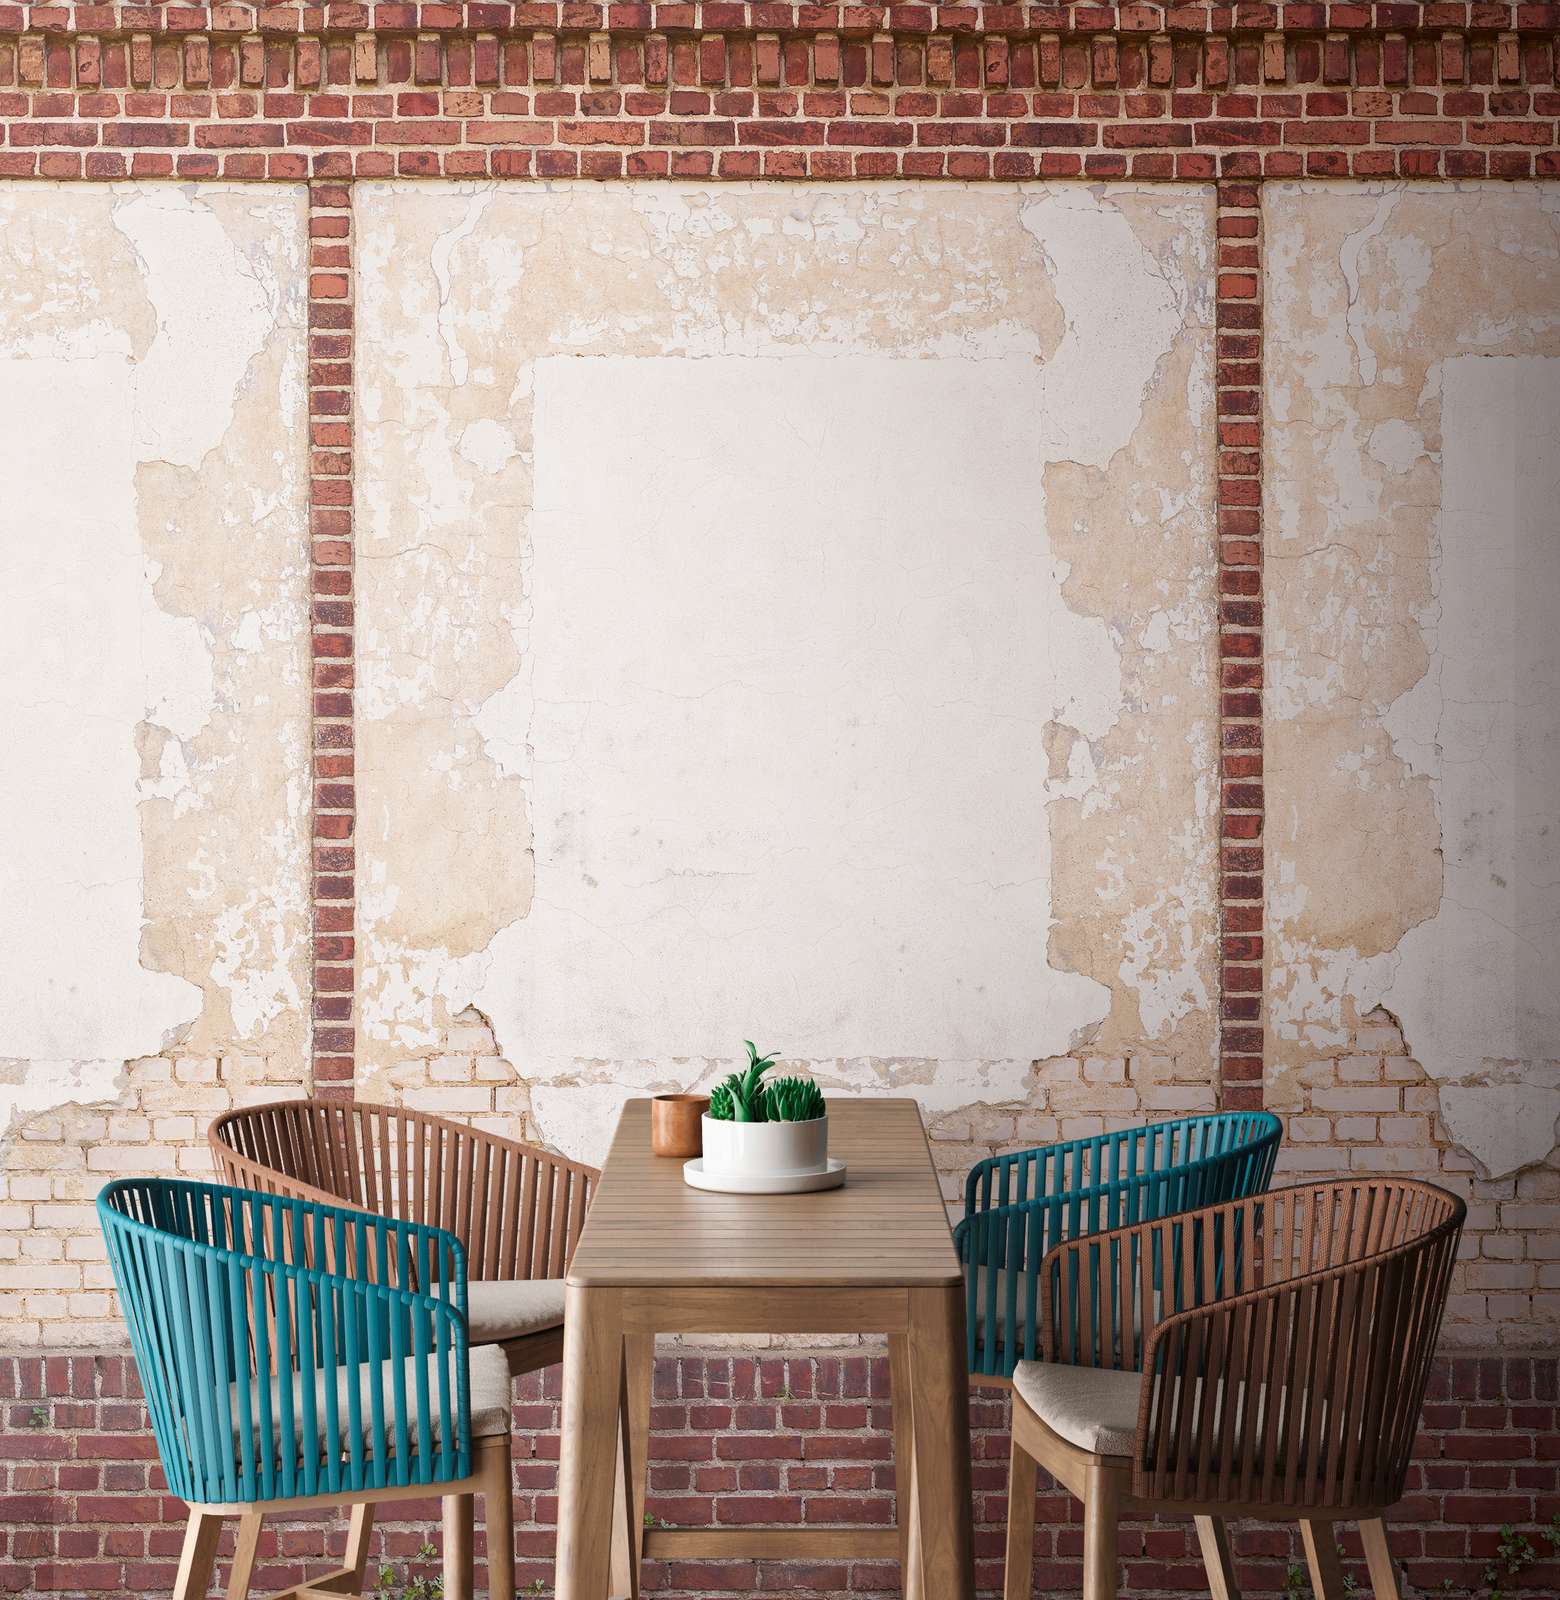             Non-woven wallpaper brick look in used look - brown, beige, red
        